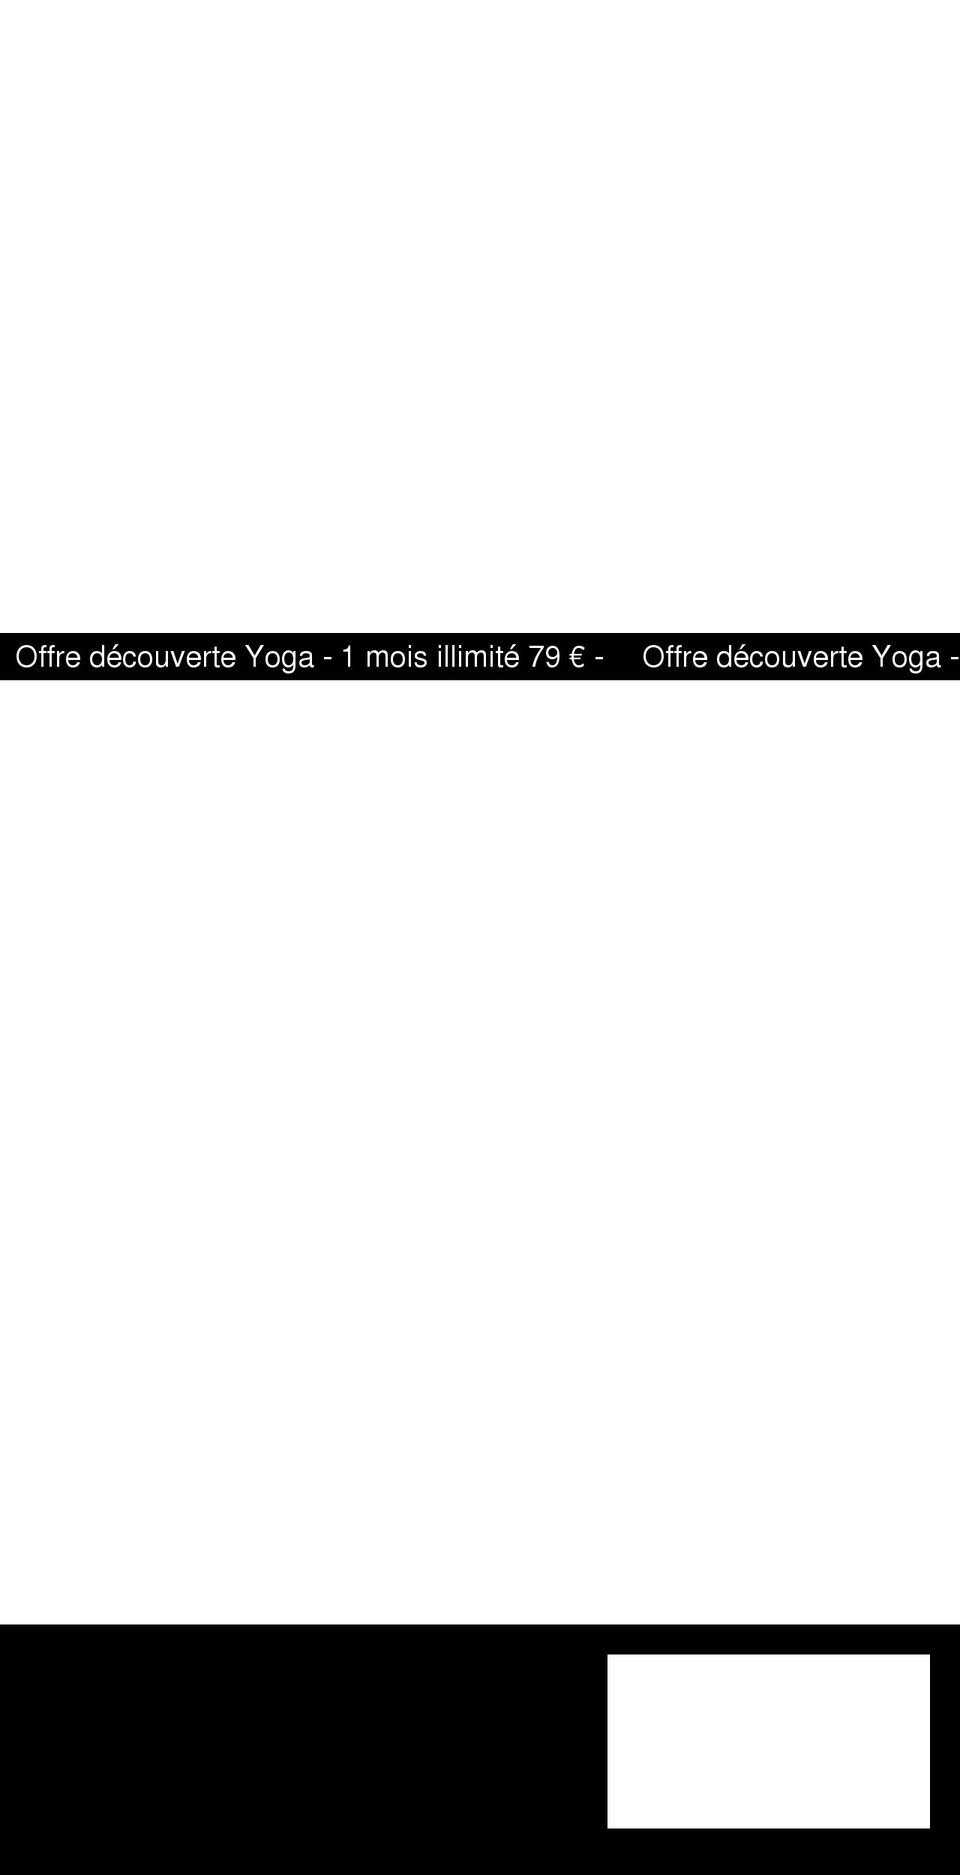 kind.yoga shopify website screenshot